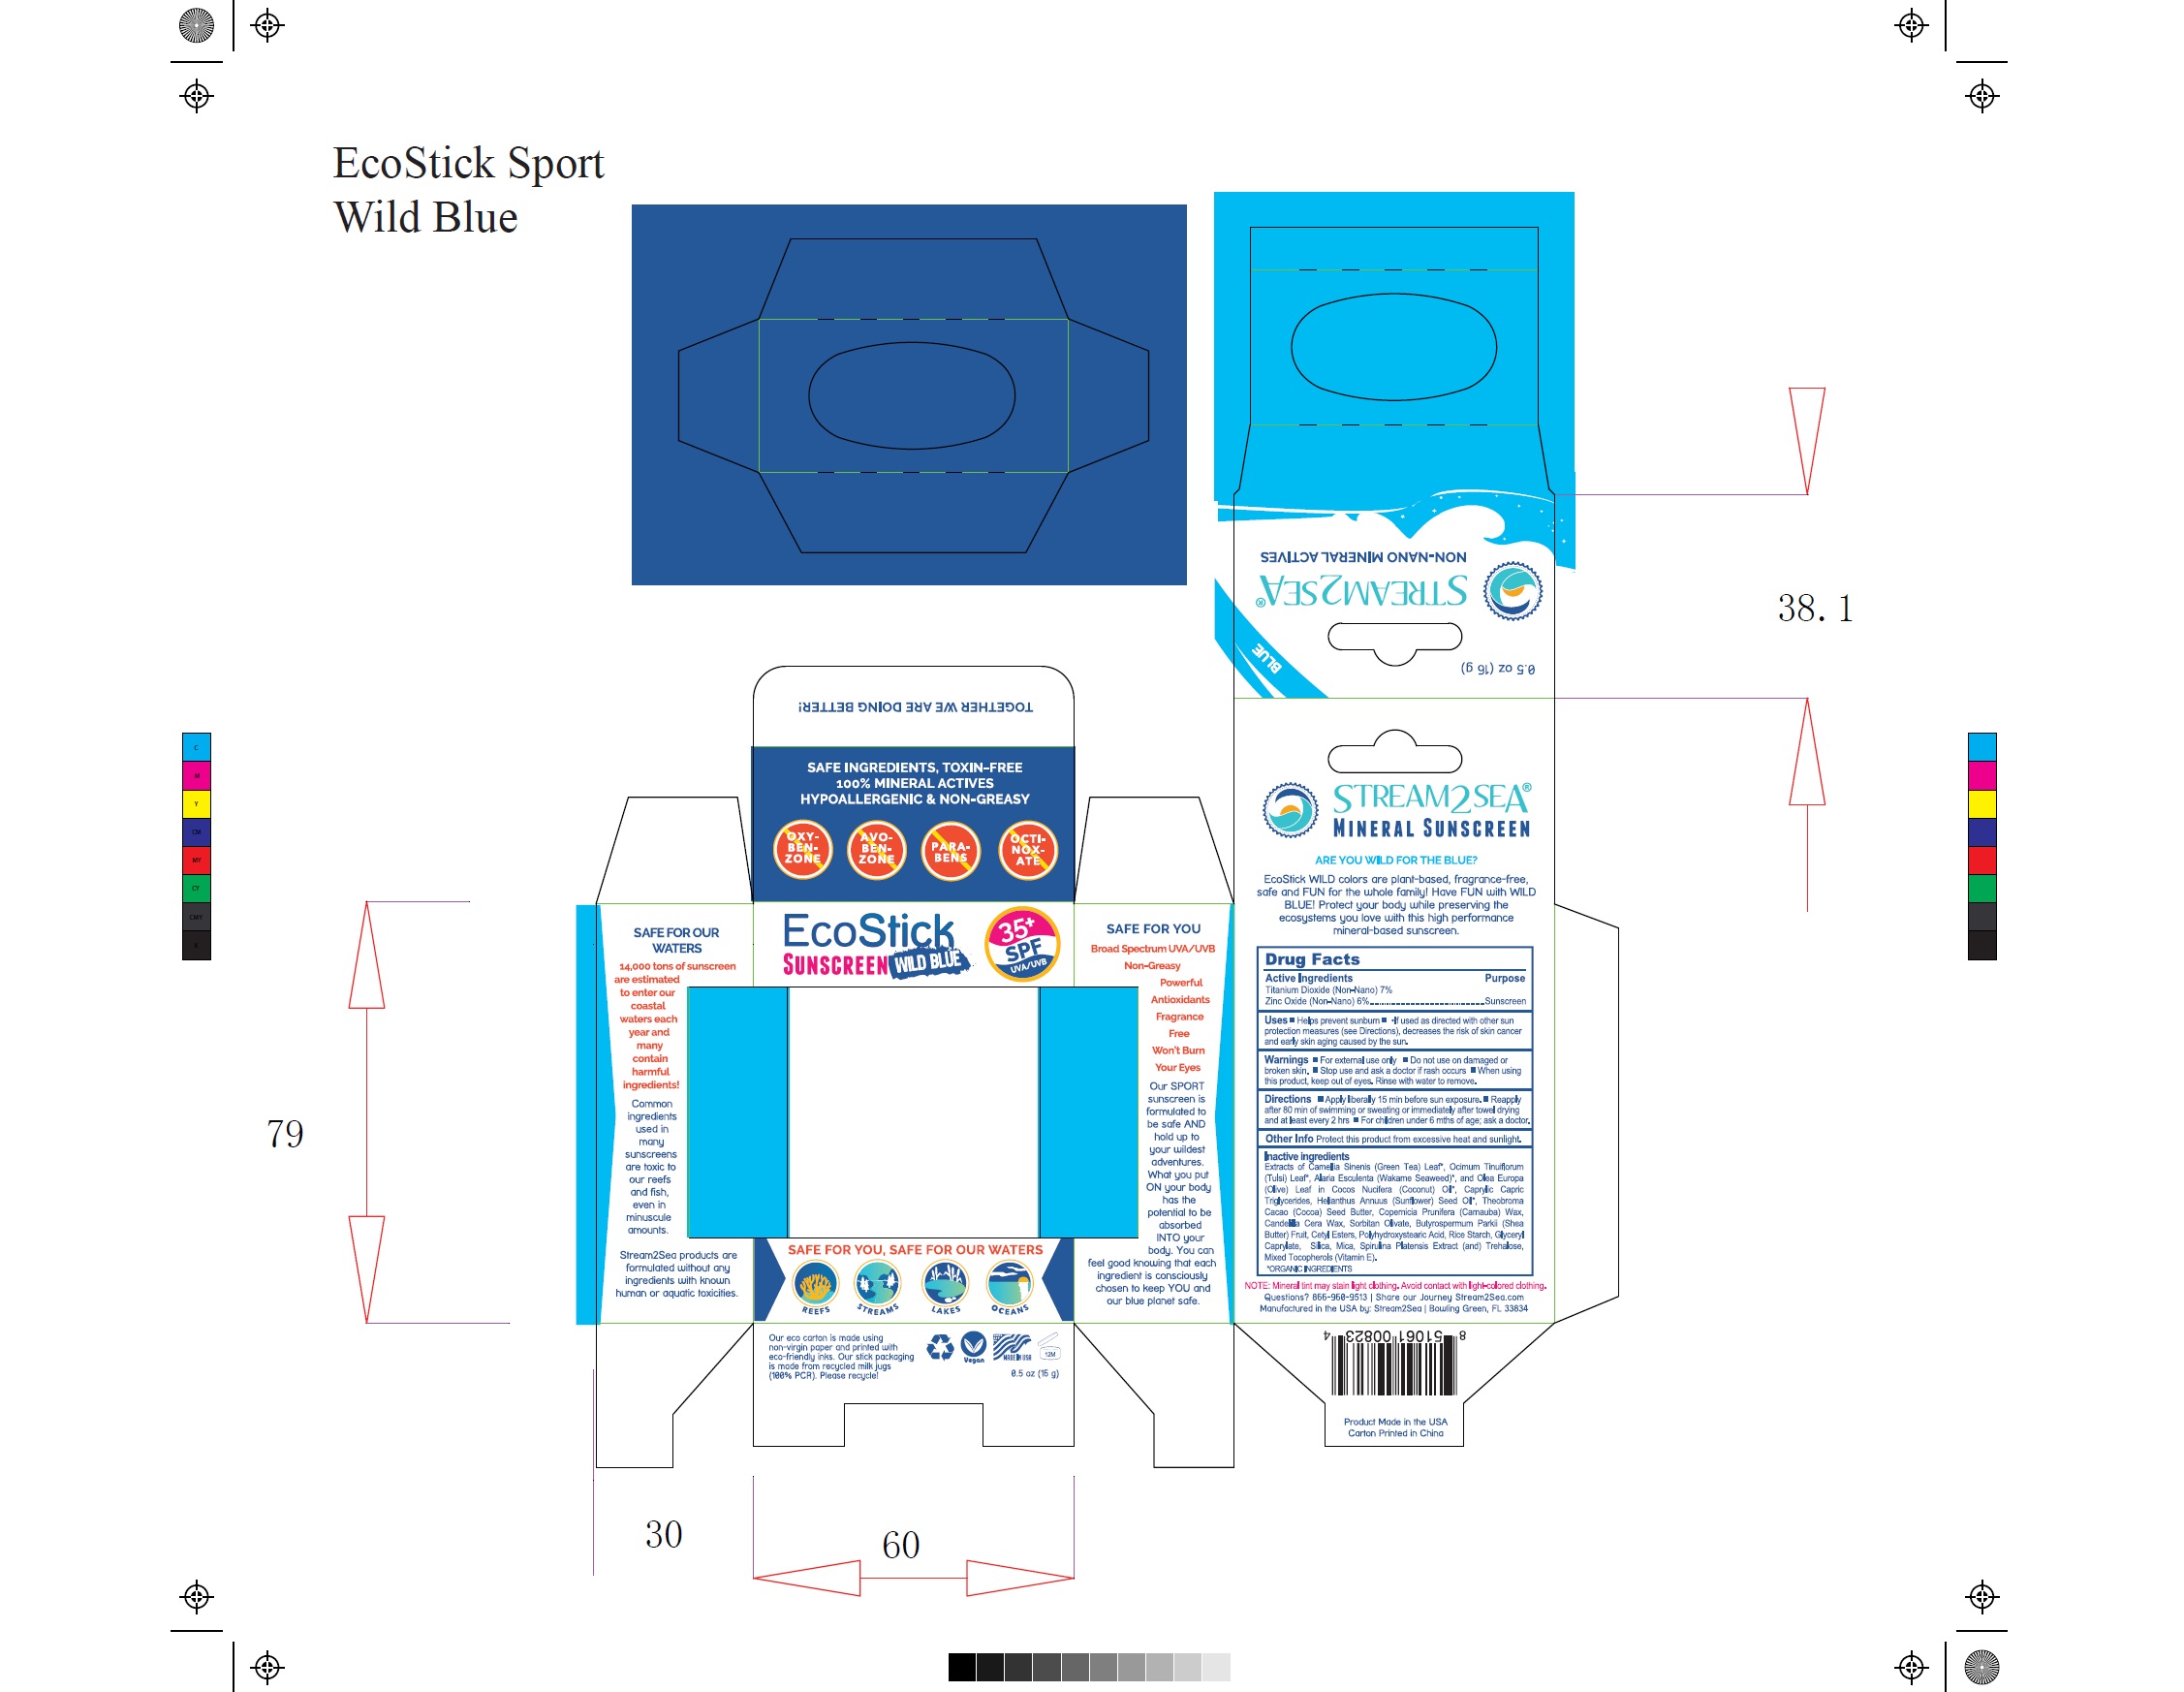 EcoStick Sport Screenscreen Wild Blue Carton Label